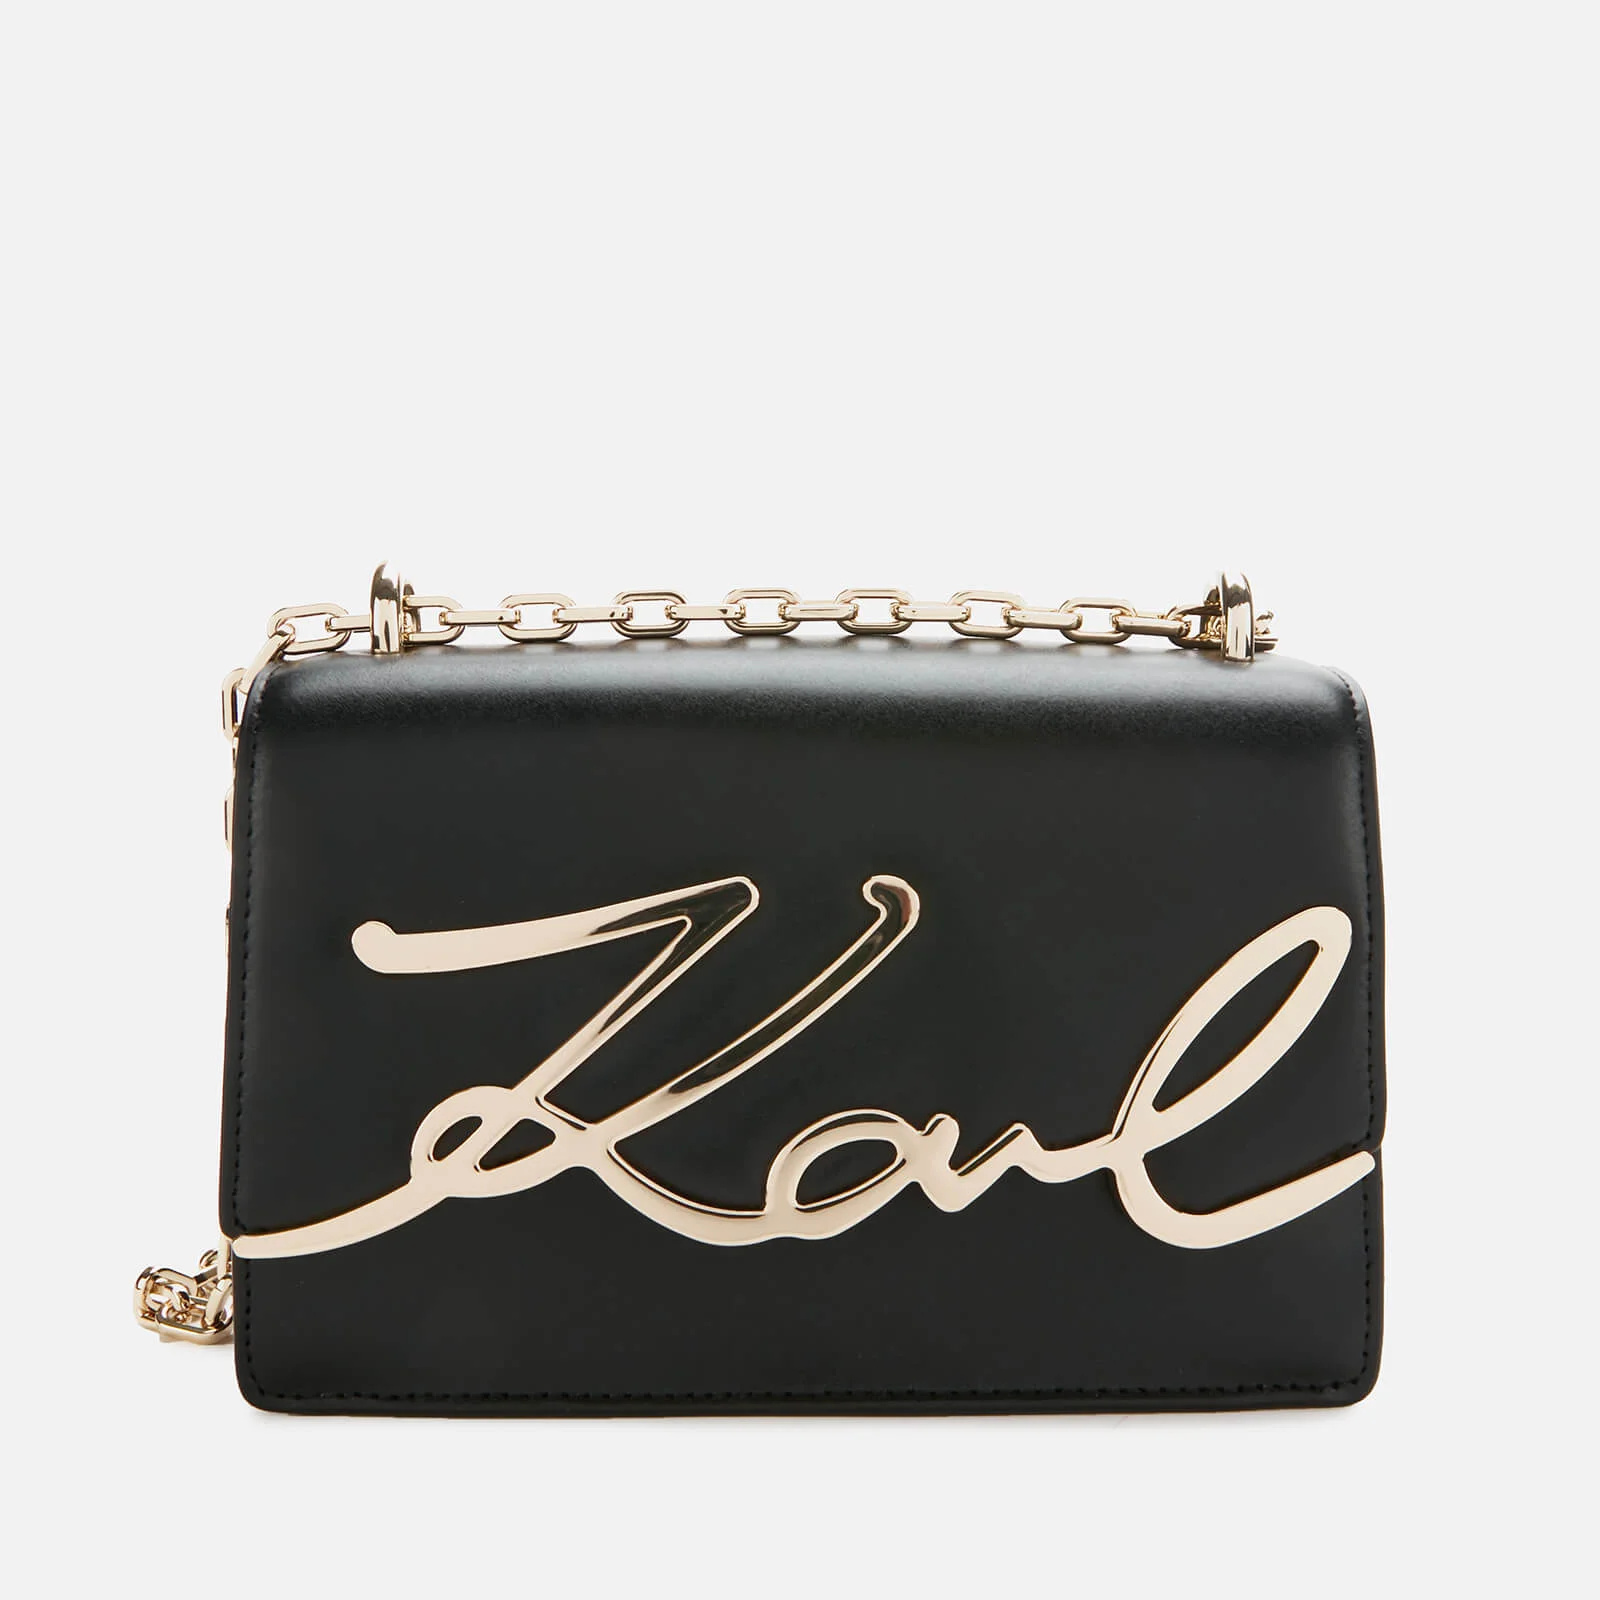 KARL LAGERFELD Women's K/Signature Small Shoulder Bag - Black/Gold Image 1